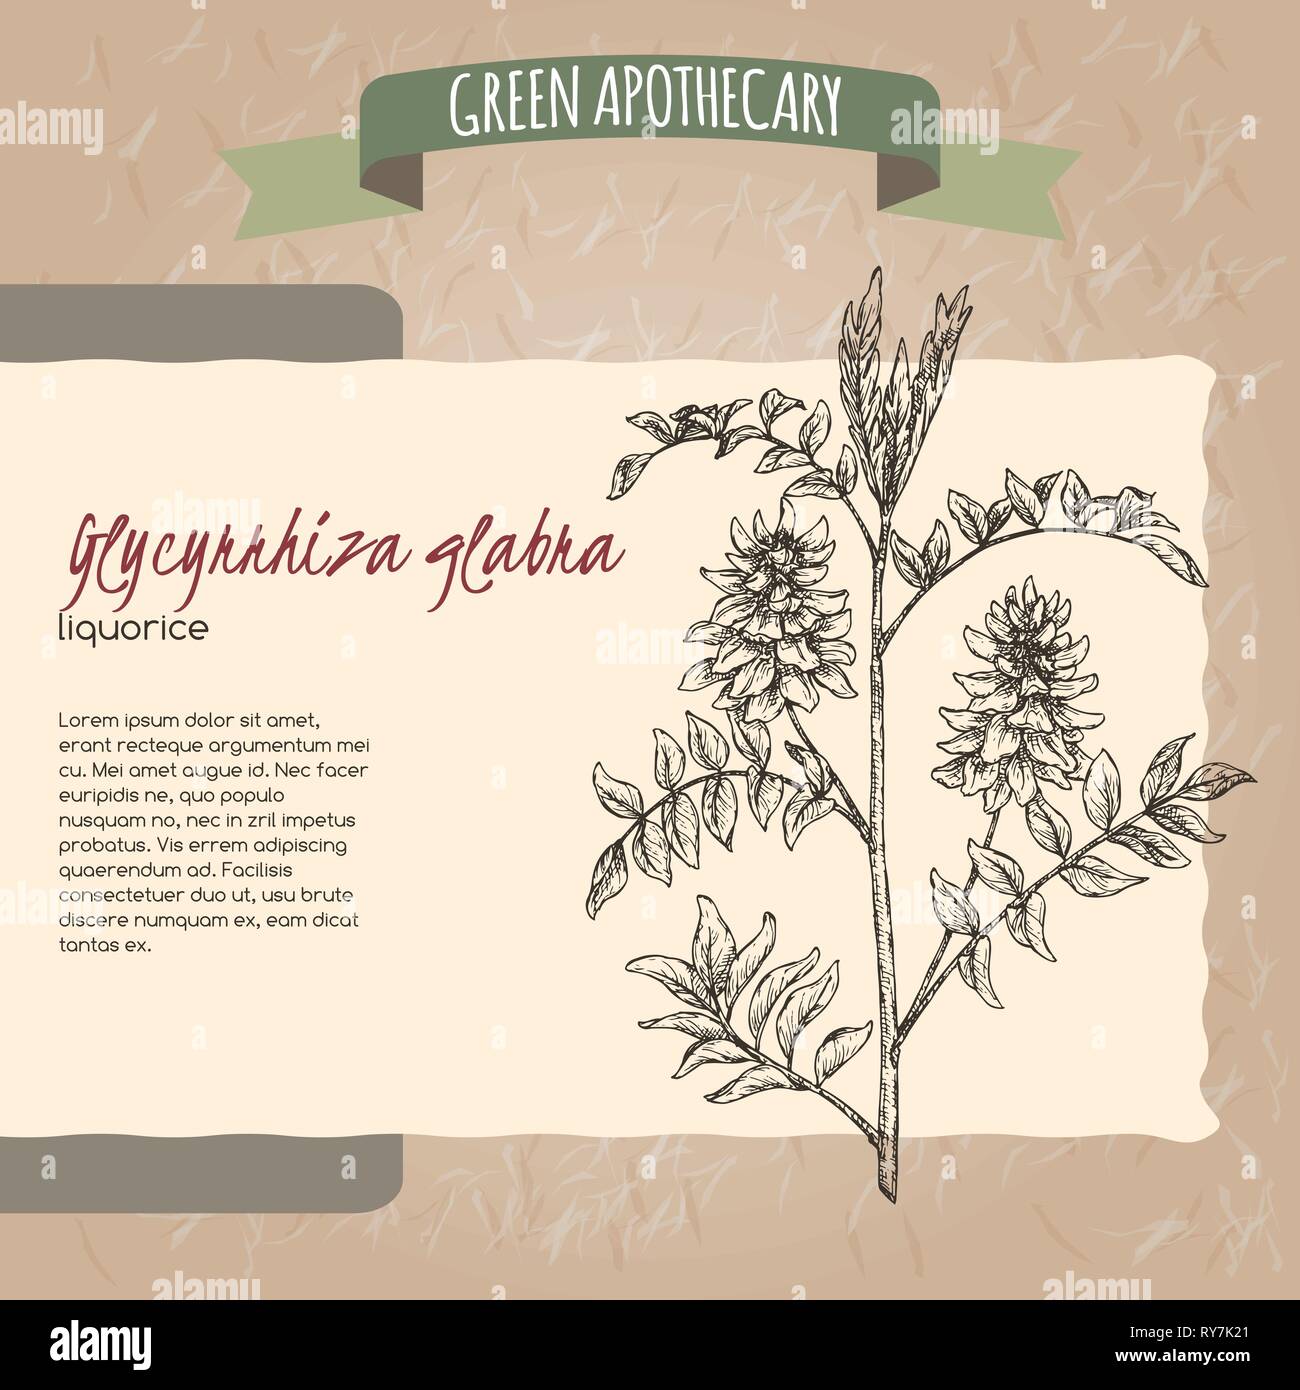 Glycyrrhiza glabra aka liquorice sketch. Green apothecary series. Stock Vector